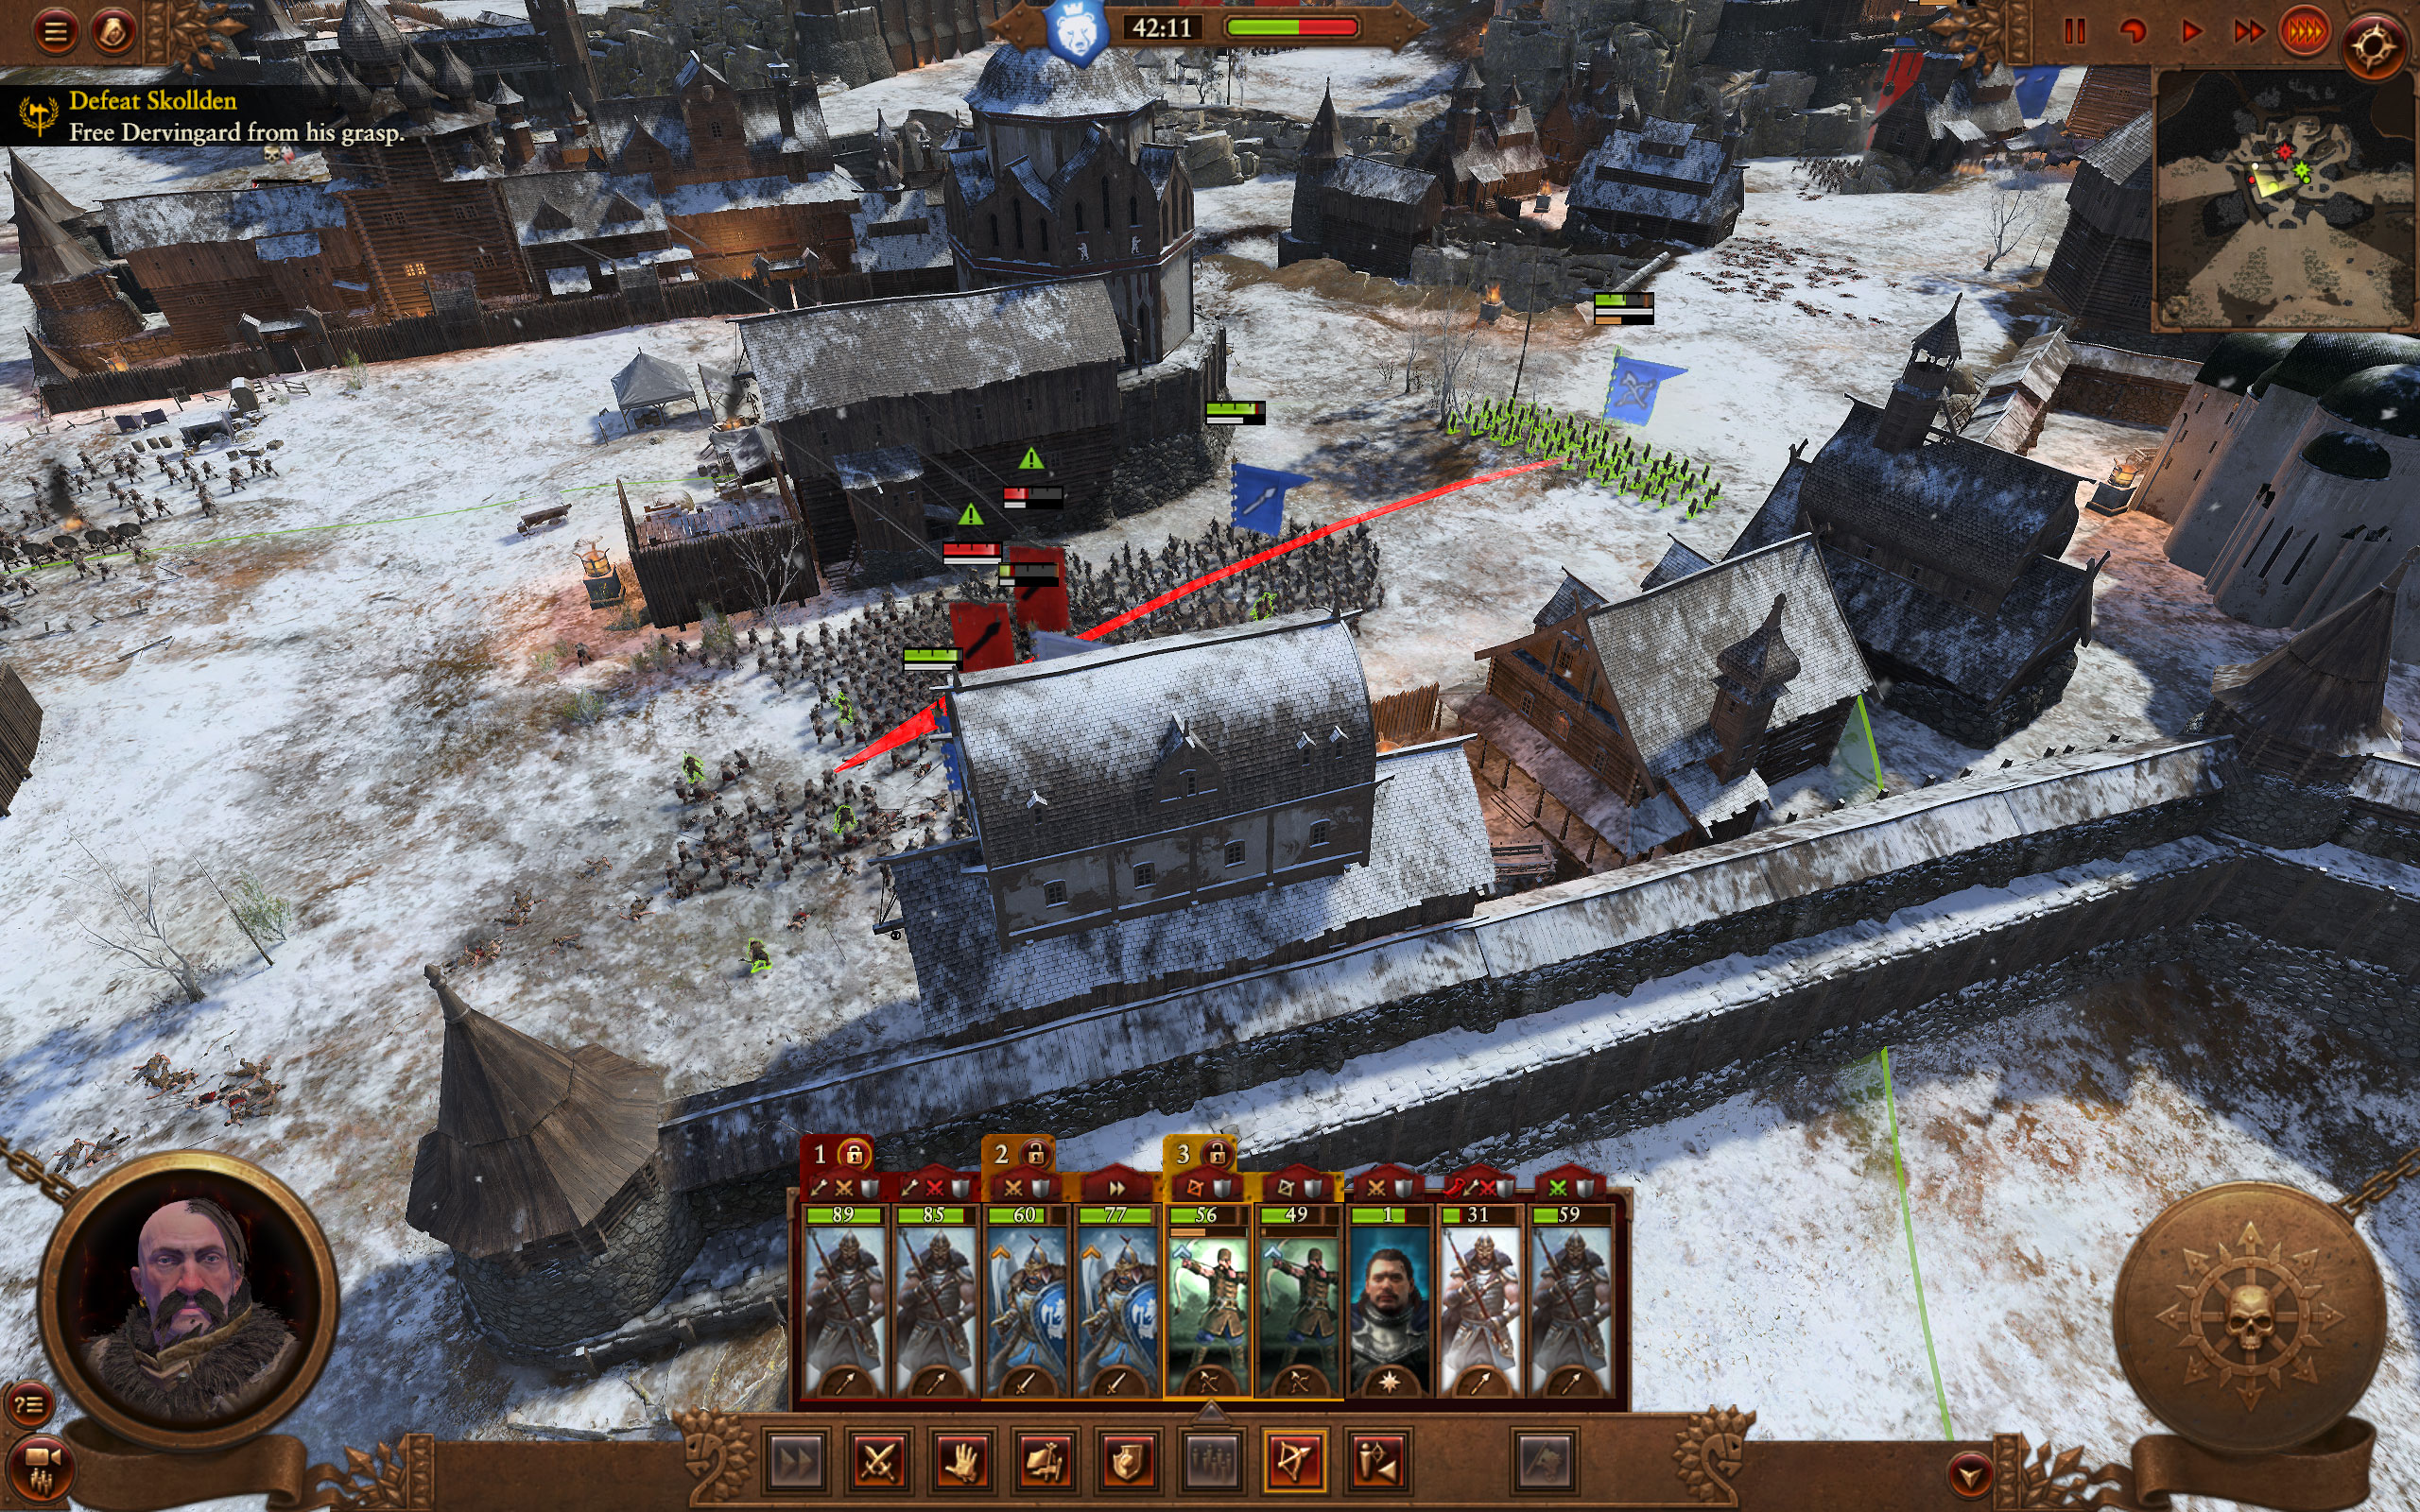 Total War: Warhammer III GPU Benchmark: 30+ GPUs Tested!